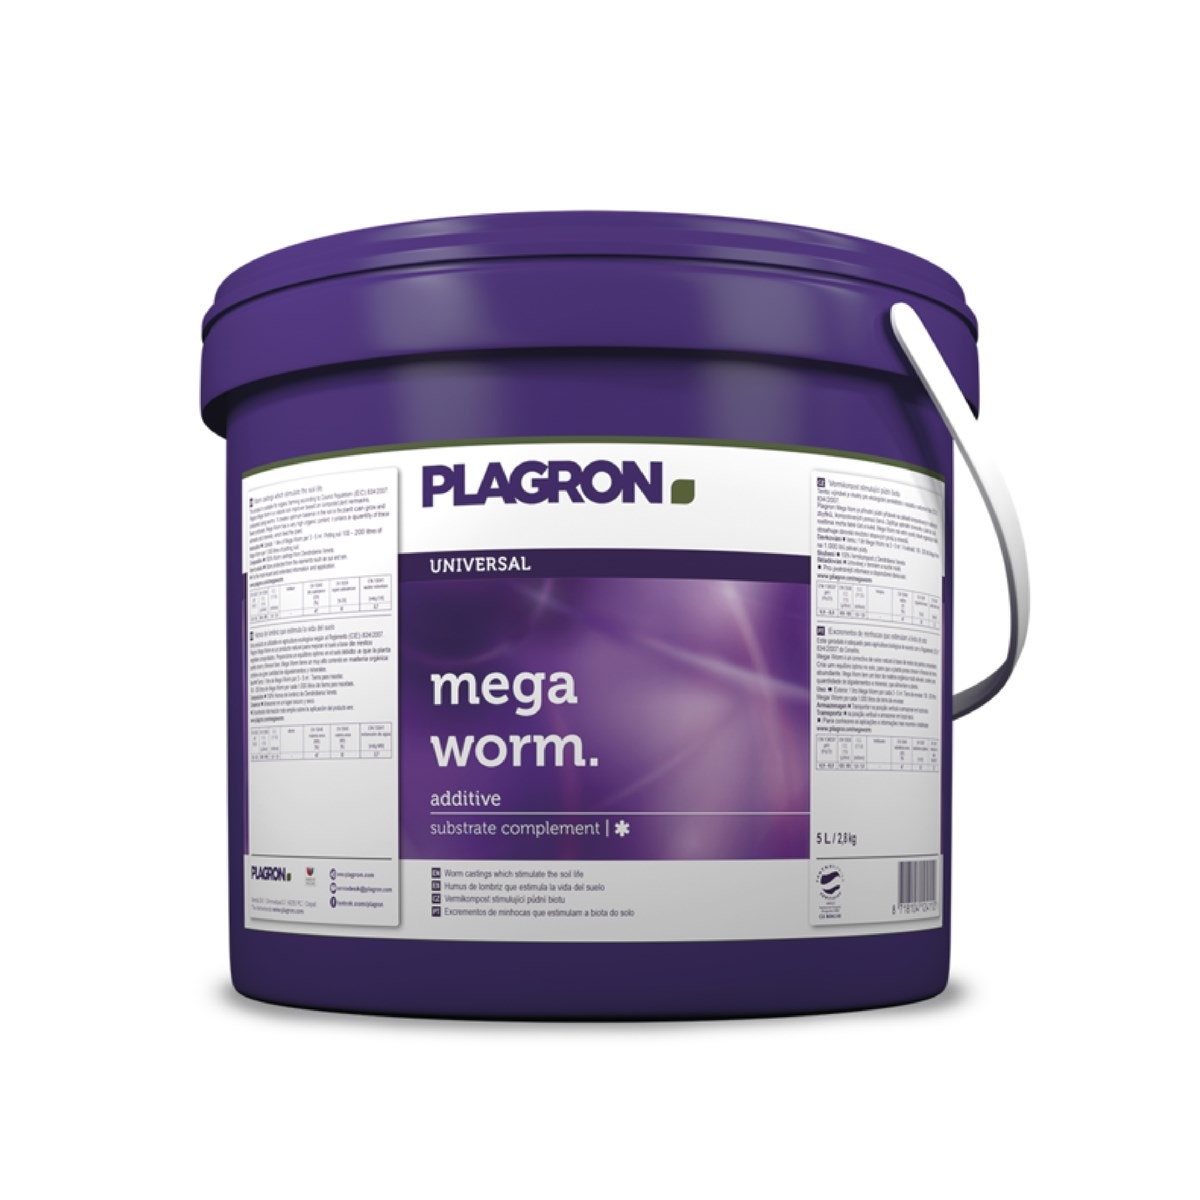 Plagron Nutrients - Mega Worm